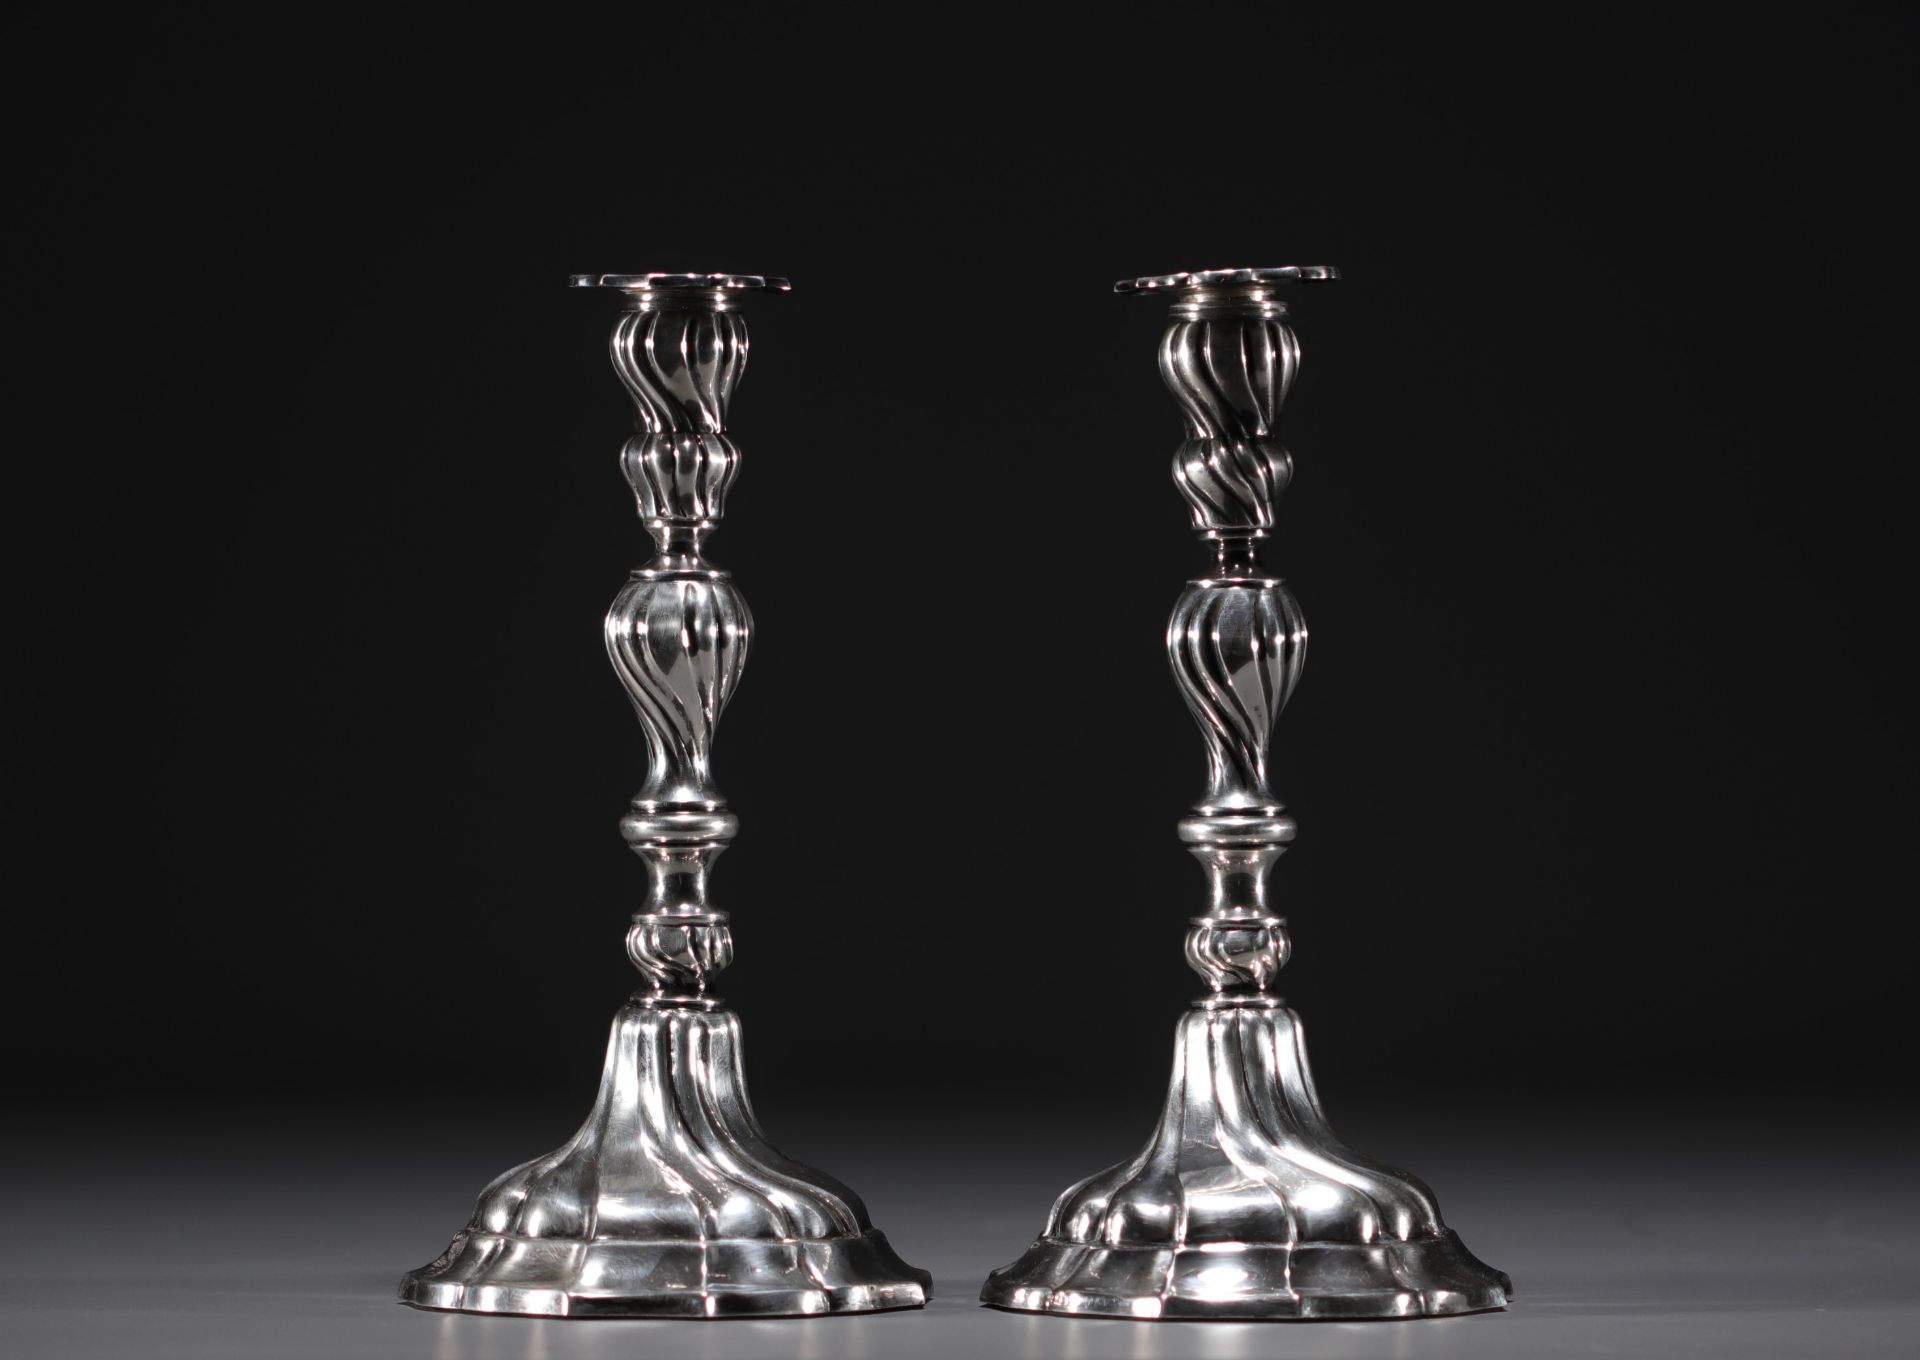 Pair of solid silver candlesticks, hallmarked 835 and three diamond hallmark, 20th century. - Image 3 of 4